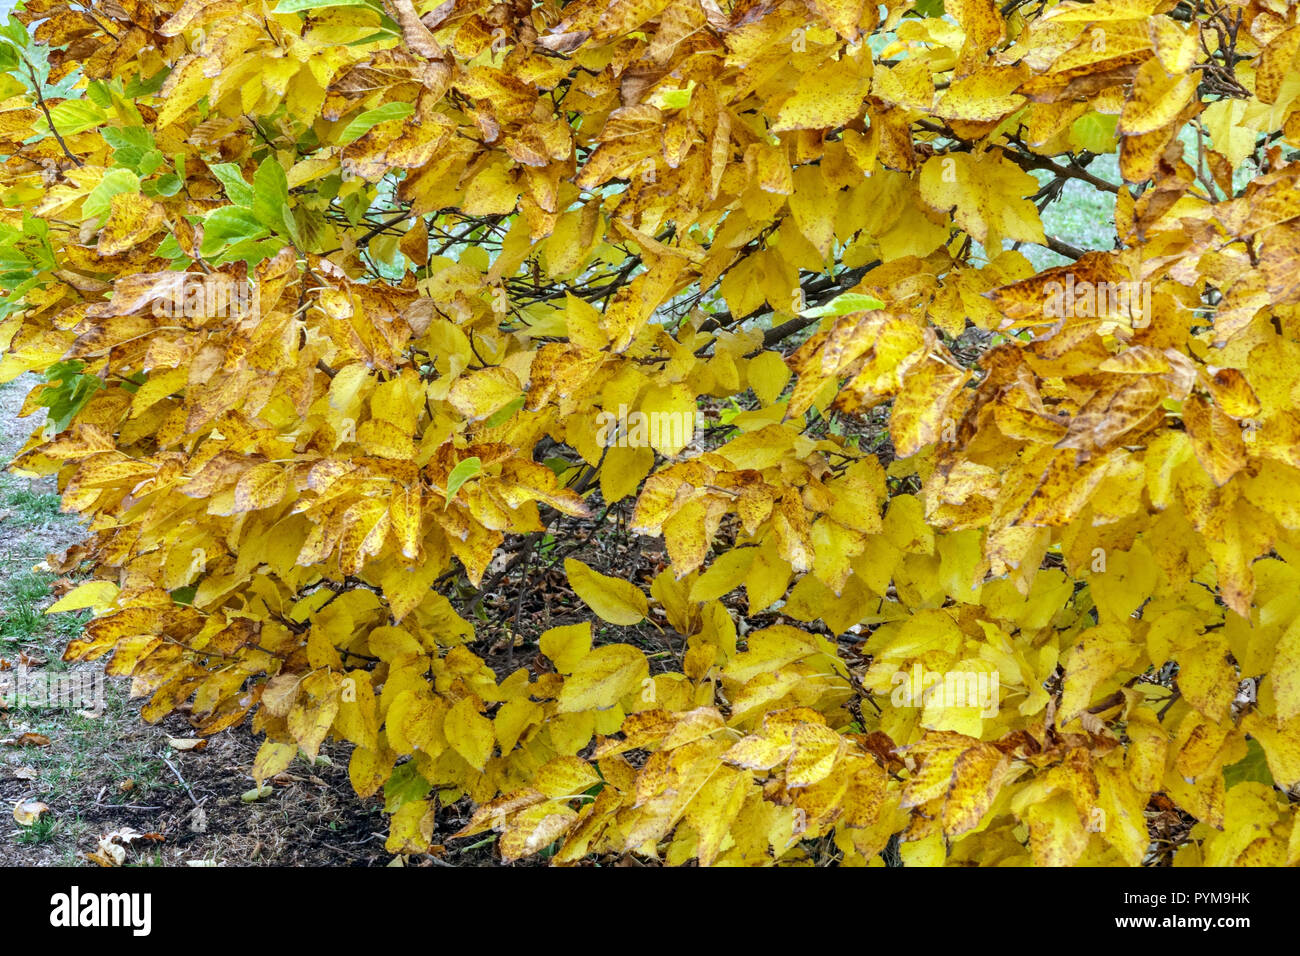 White Mulberry, Morus alba 'Nana' in autumn leaves colors Stock Photo